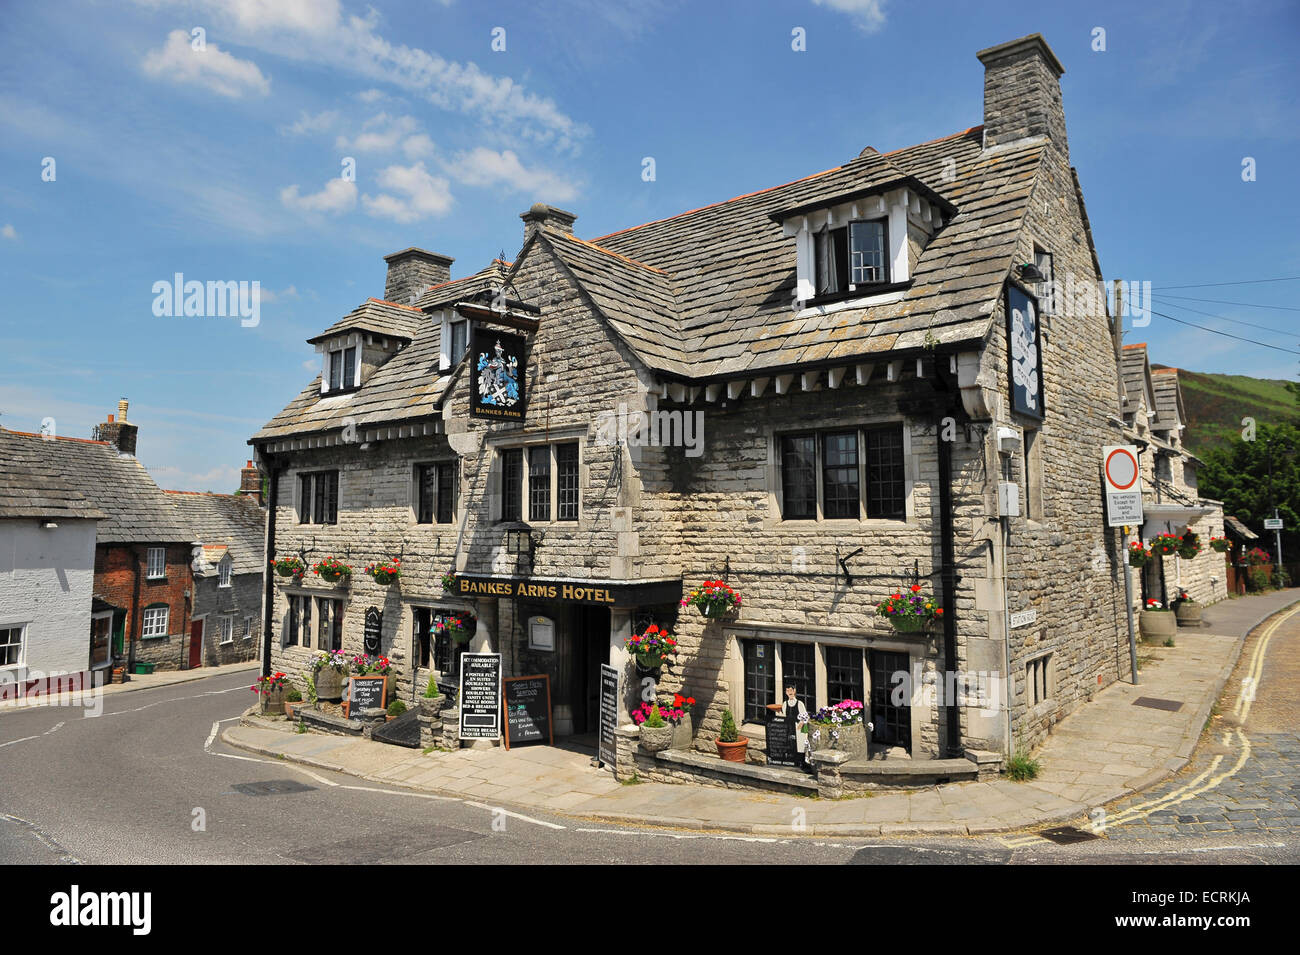 The Bankes Arms Hotel in Corfe Castle Village, Dorset, England, United Kingdom. Stock Photo